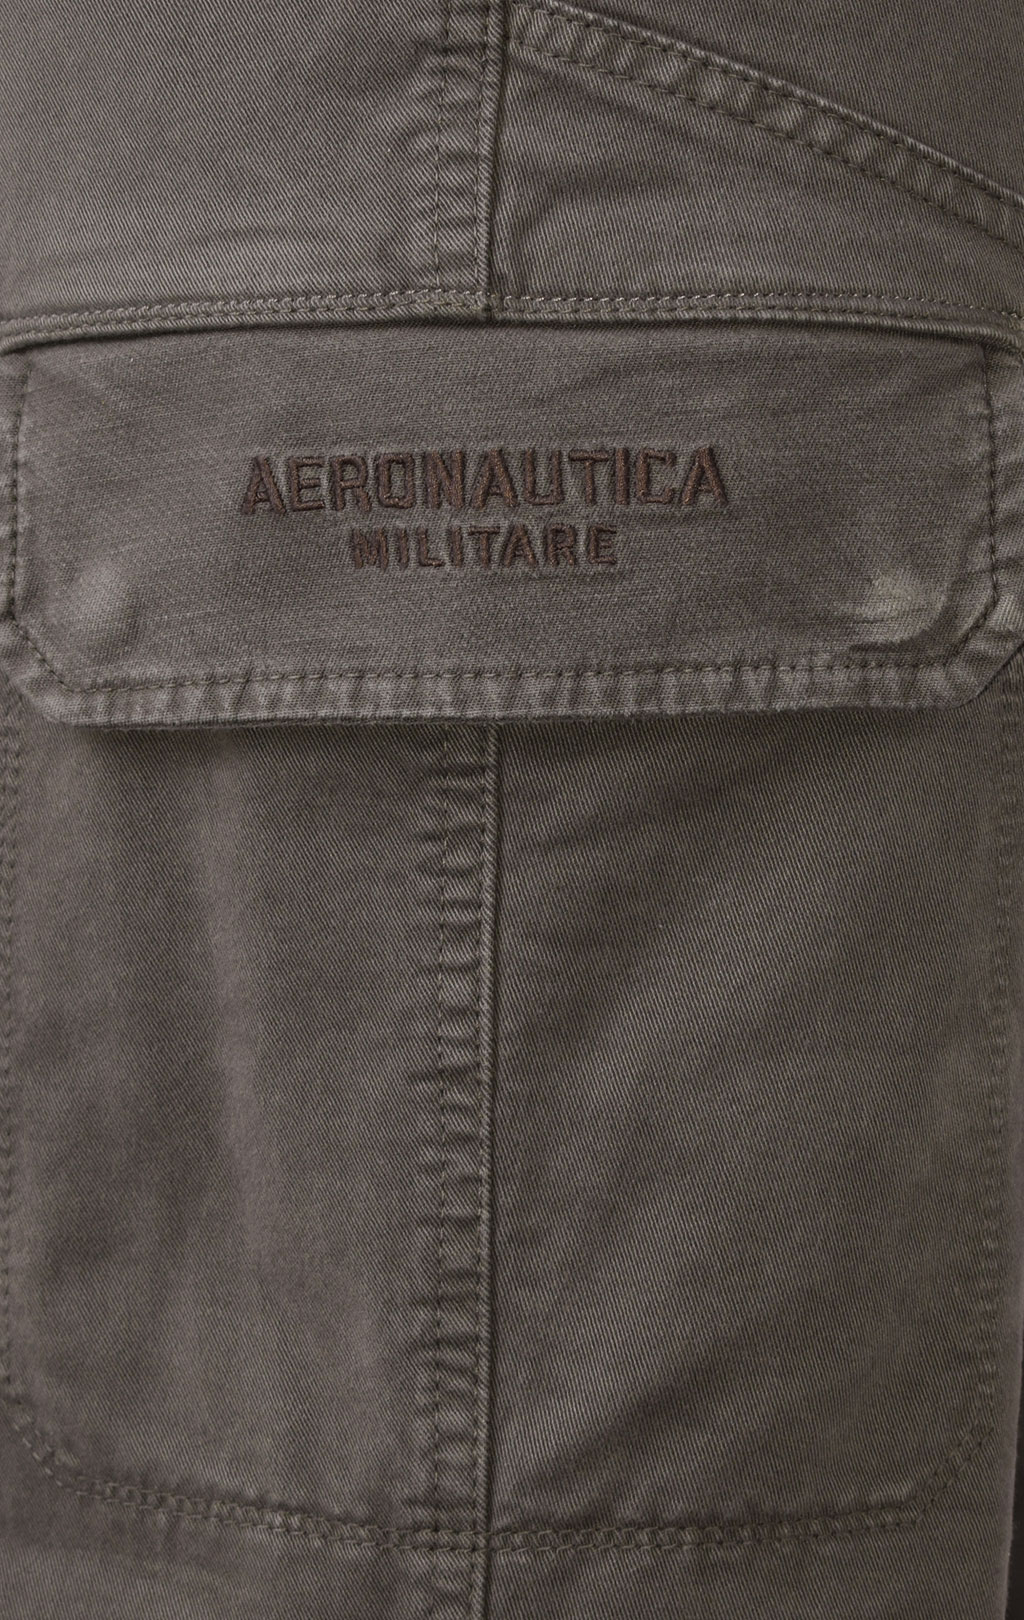 Брюки-карго AERONAUTICA MILITARE big size плотные FW 23/24/AL brown (PA 1561) 